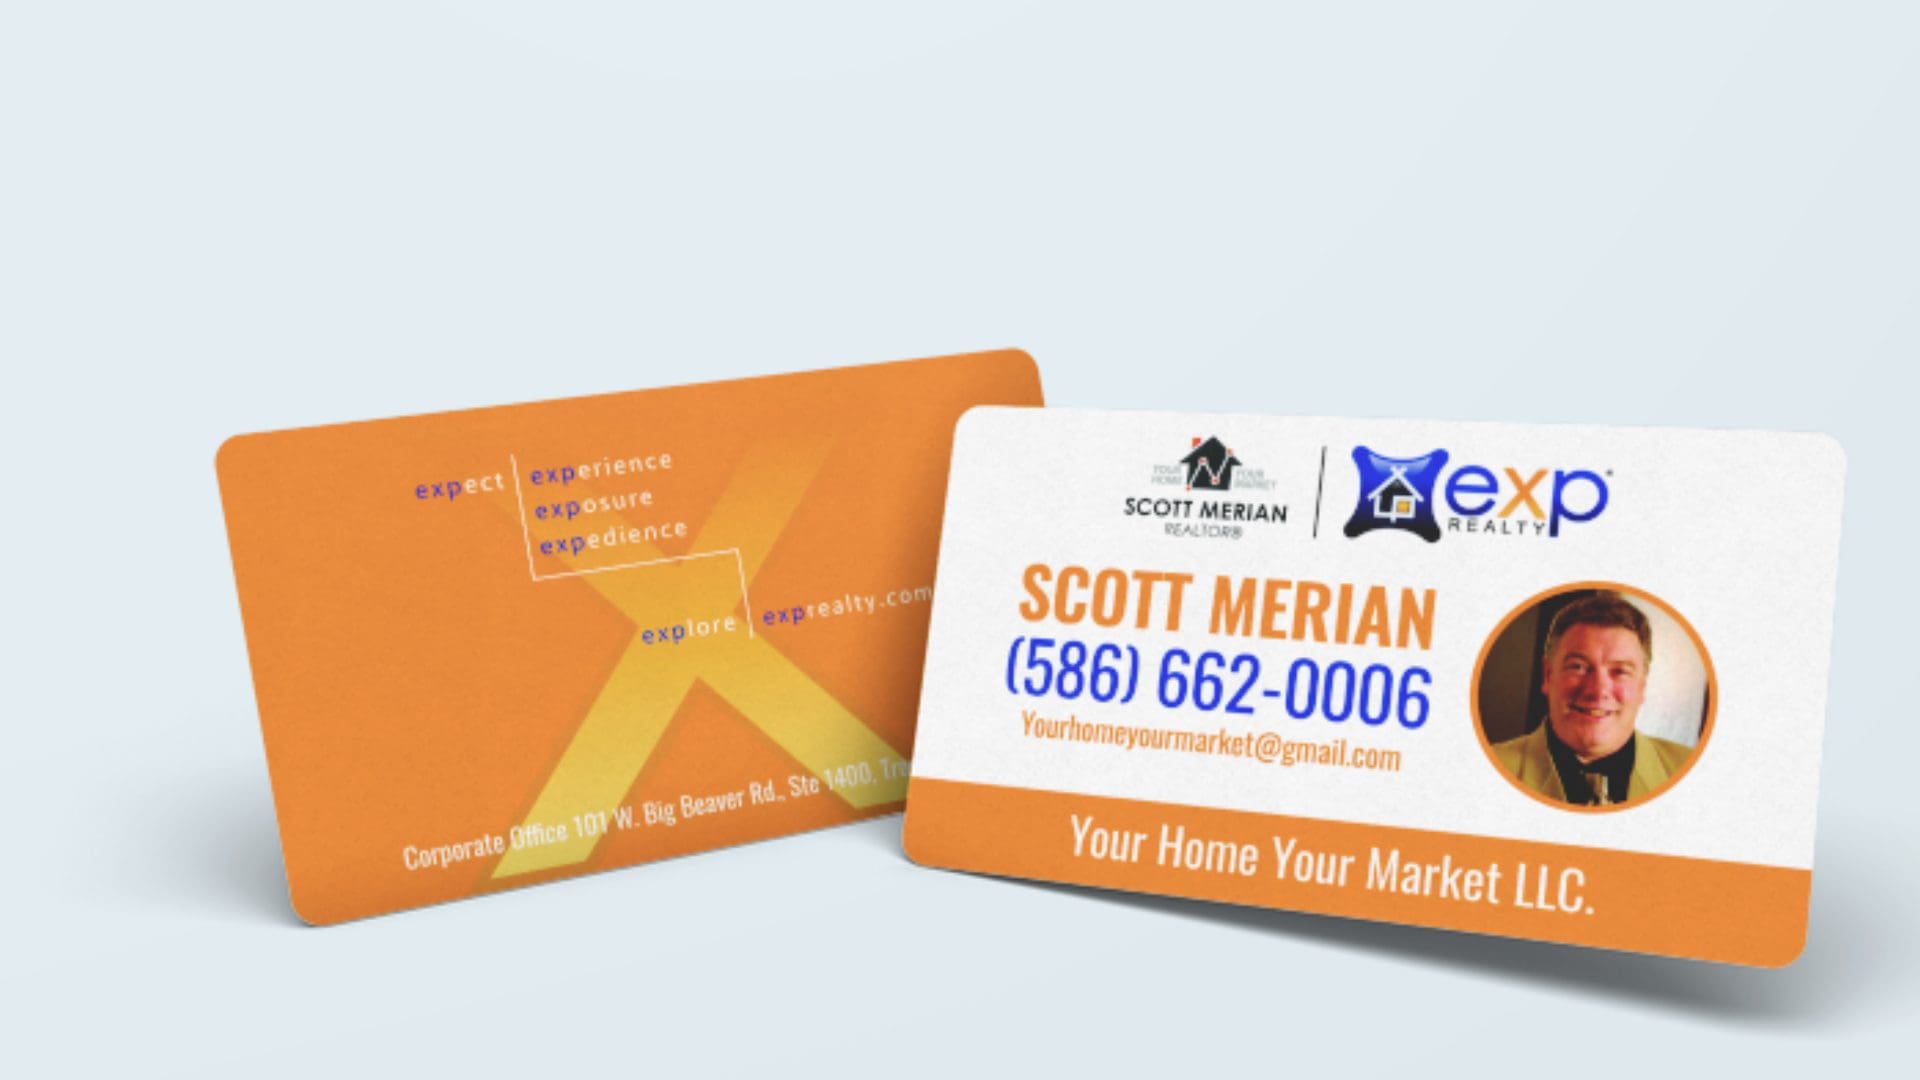 Your Home Your Market LLC - Scott Merian's Cards (1)